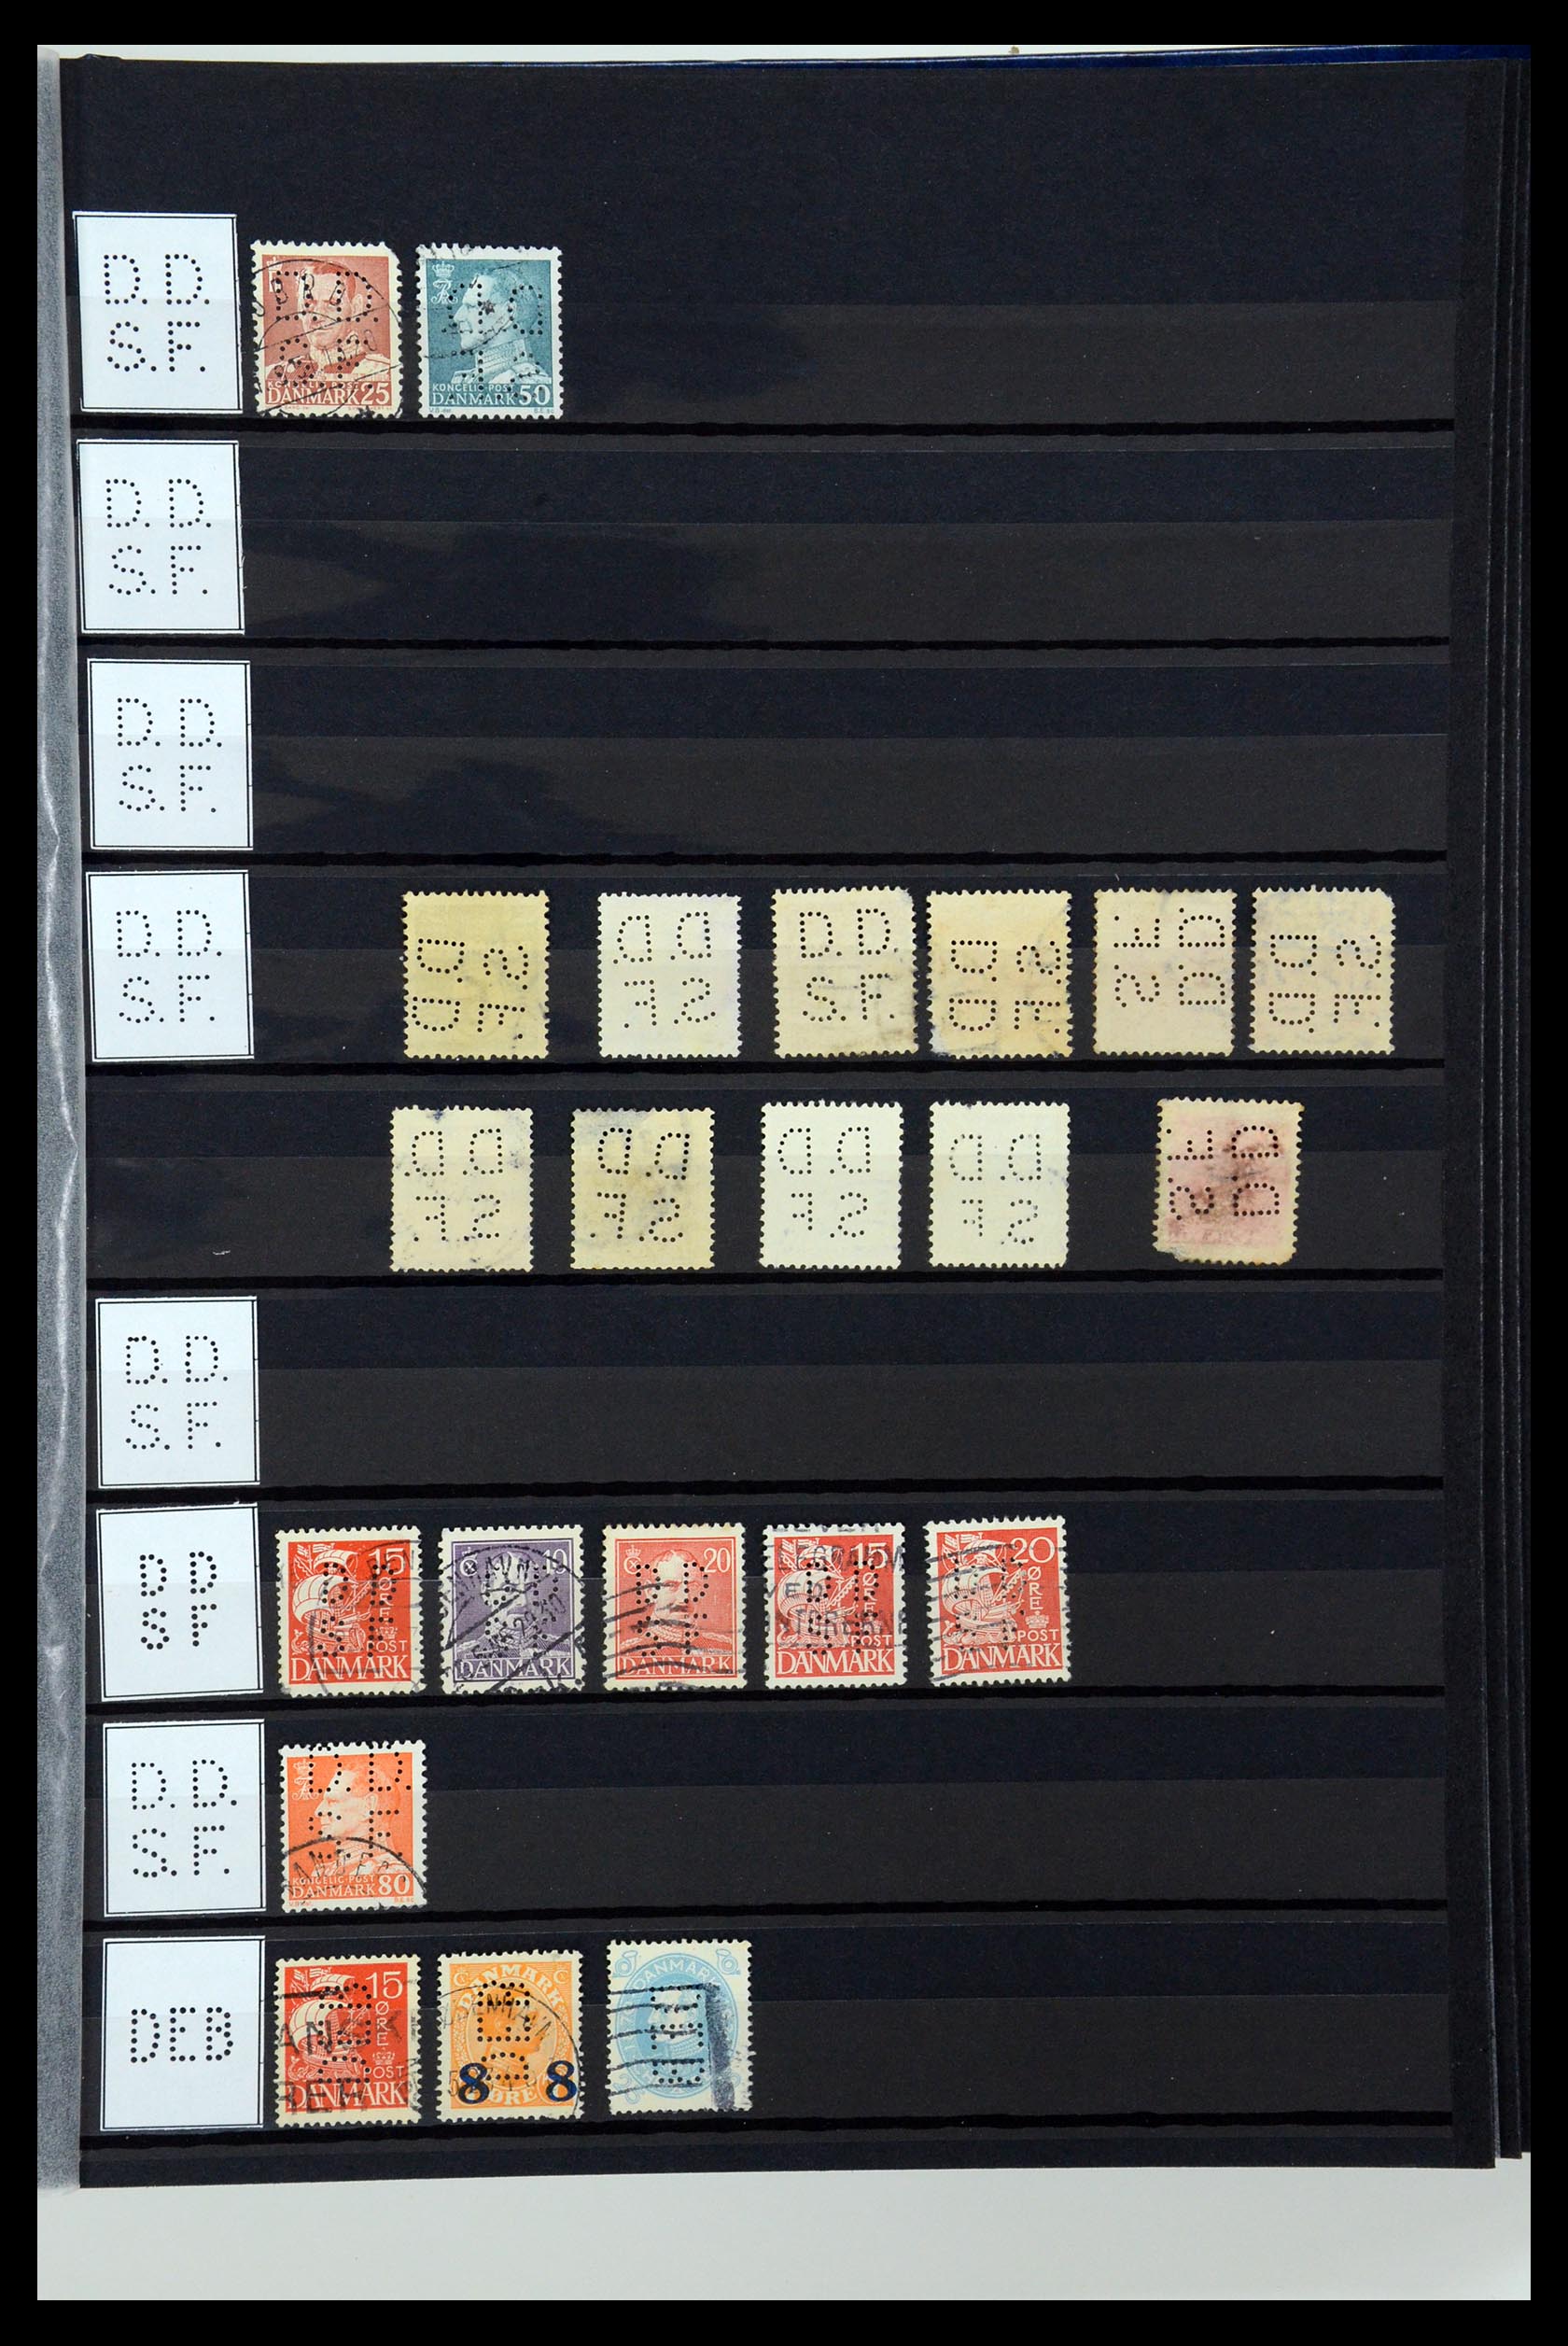 36396 035 - Stamp collection 36396 Denmark perfins.